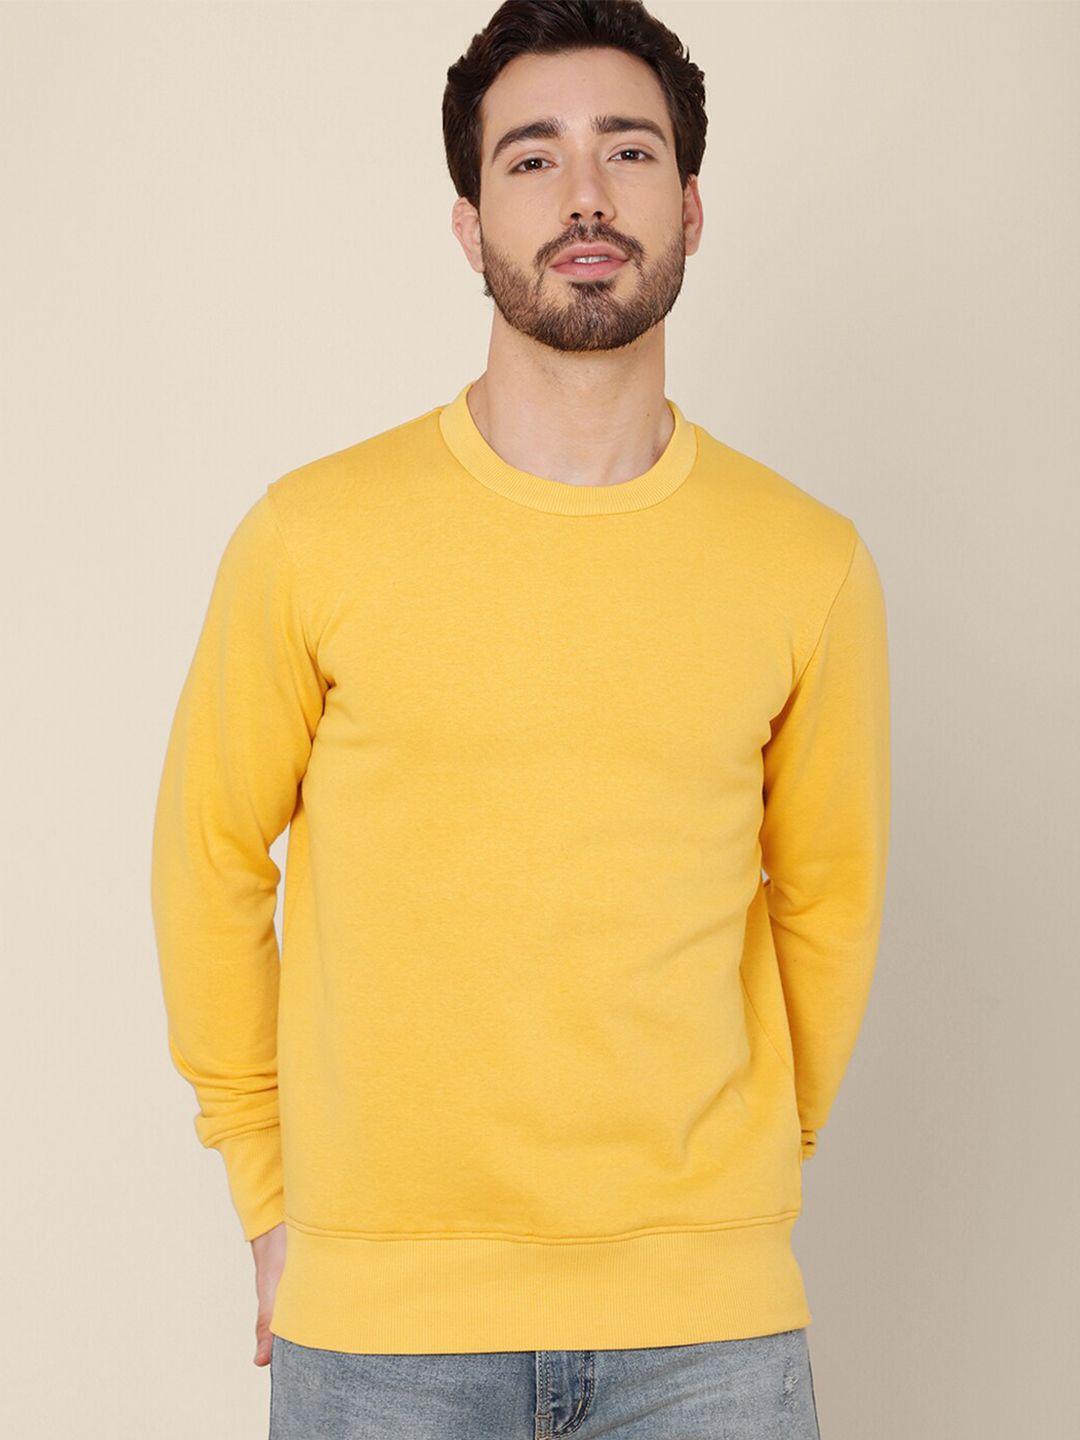 free-authority-men-yellow-sweatshirt